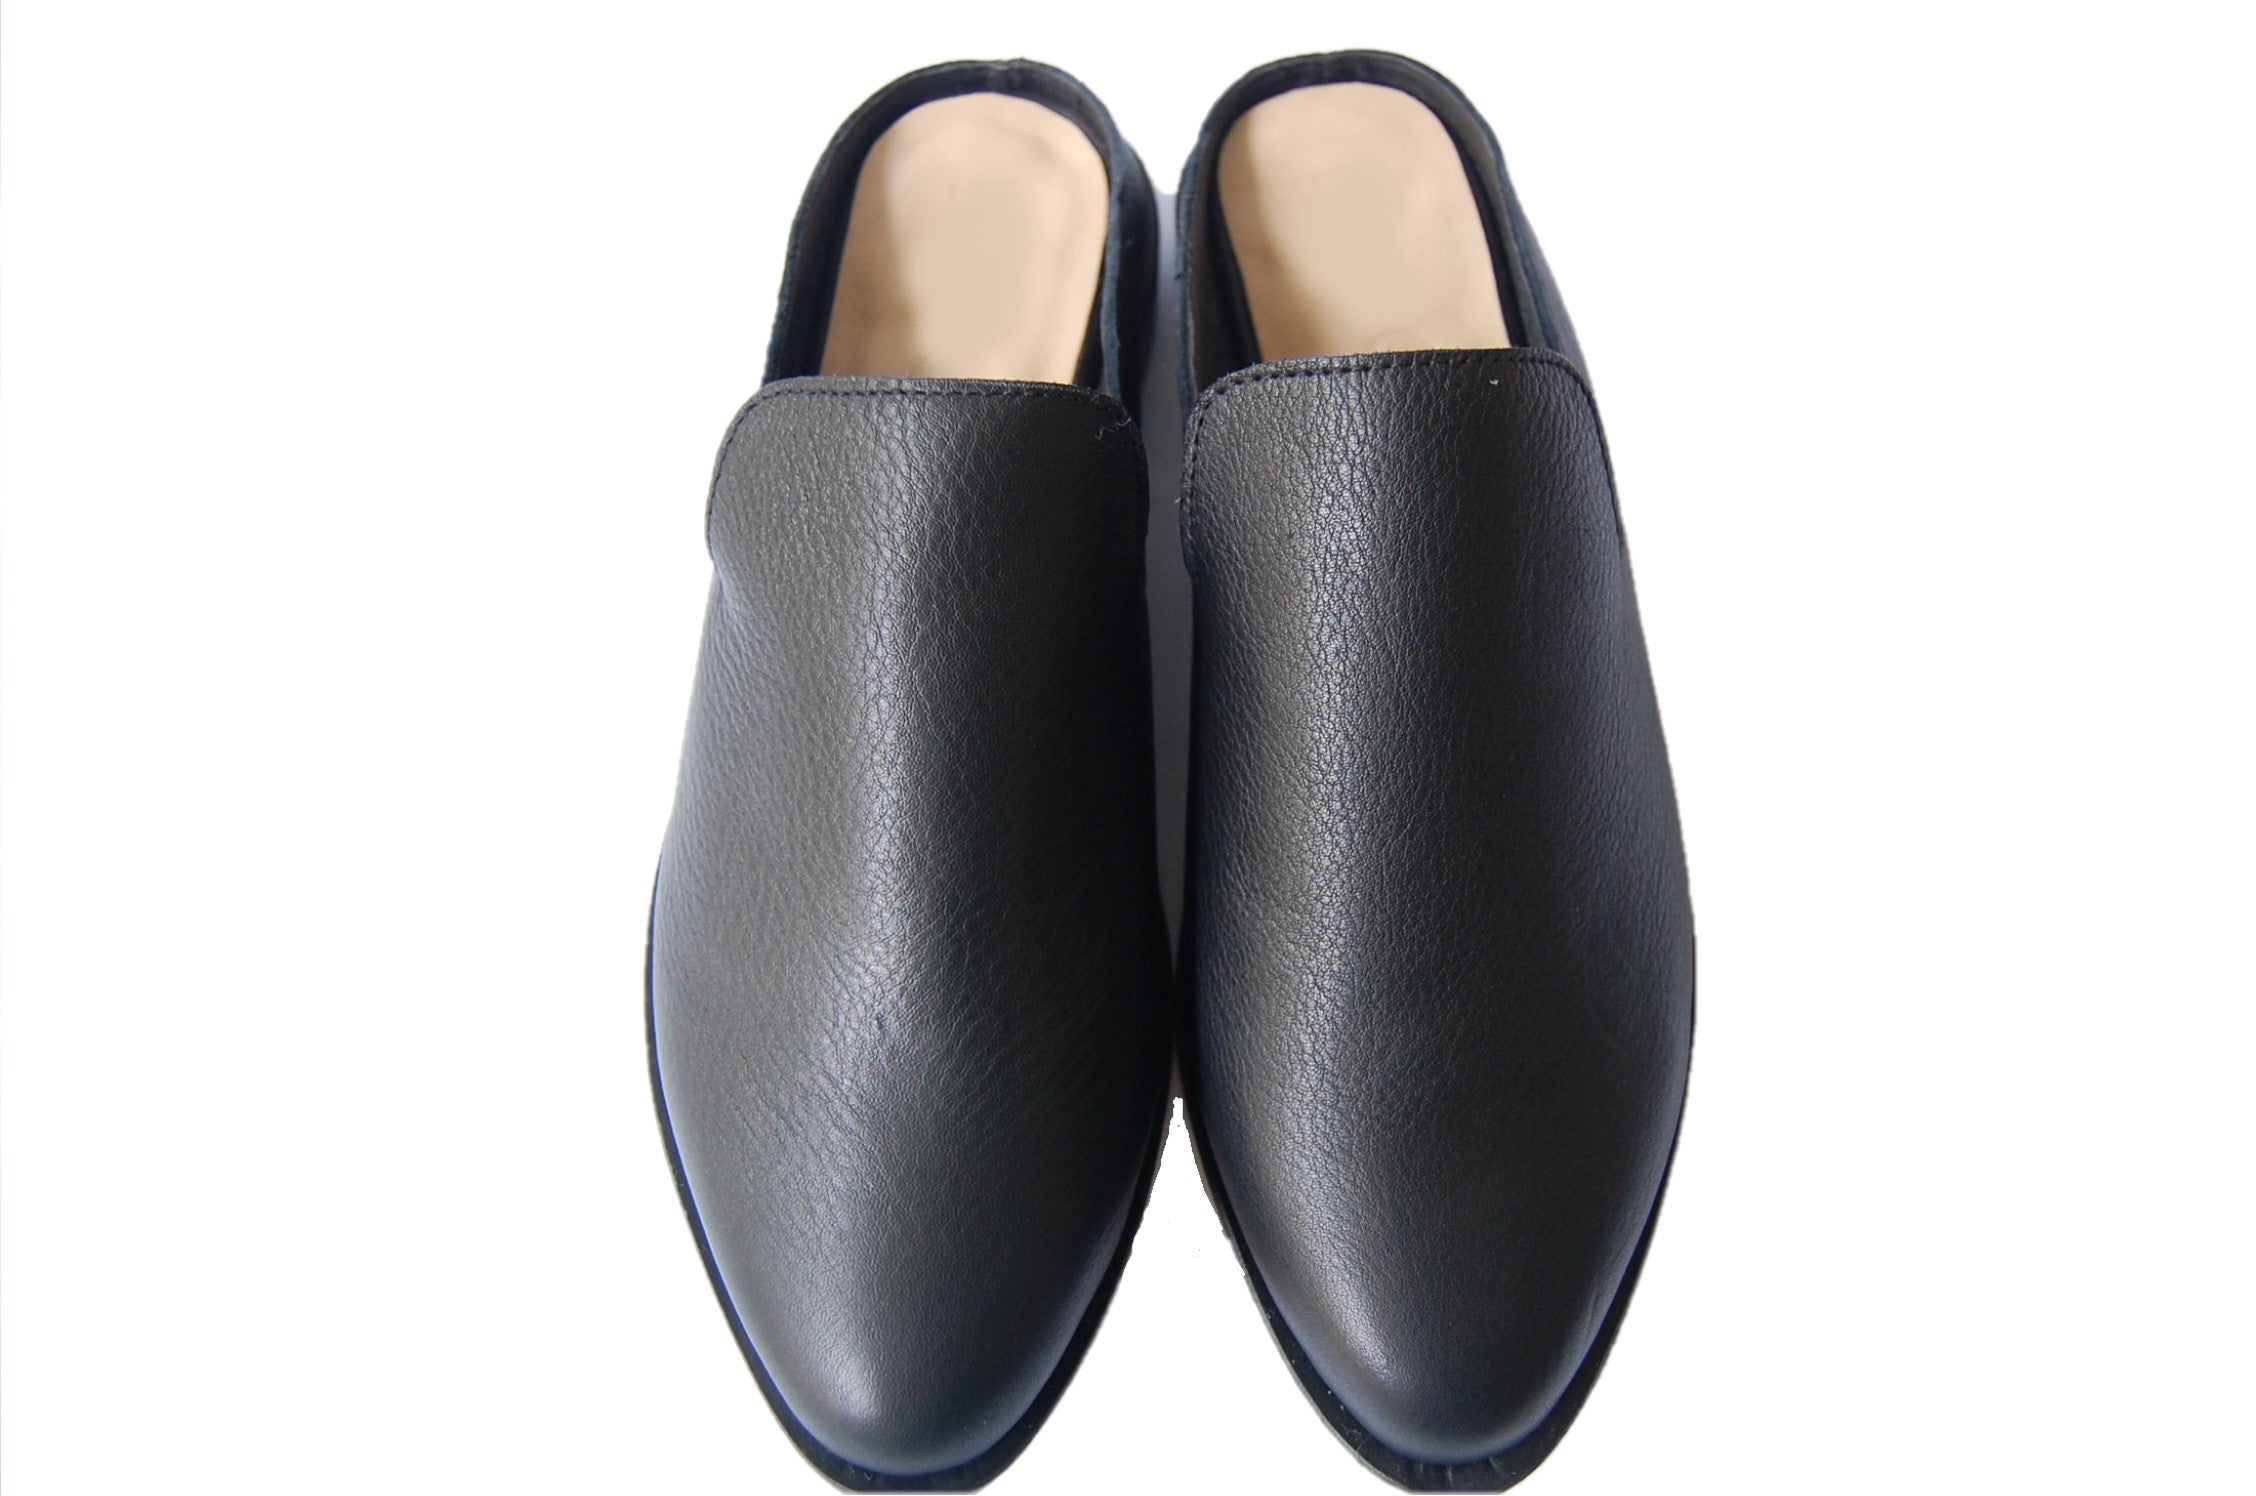 SAM-Loafers-Black Leather